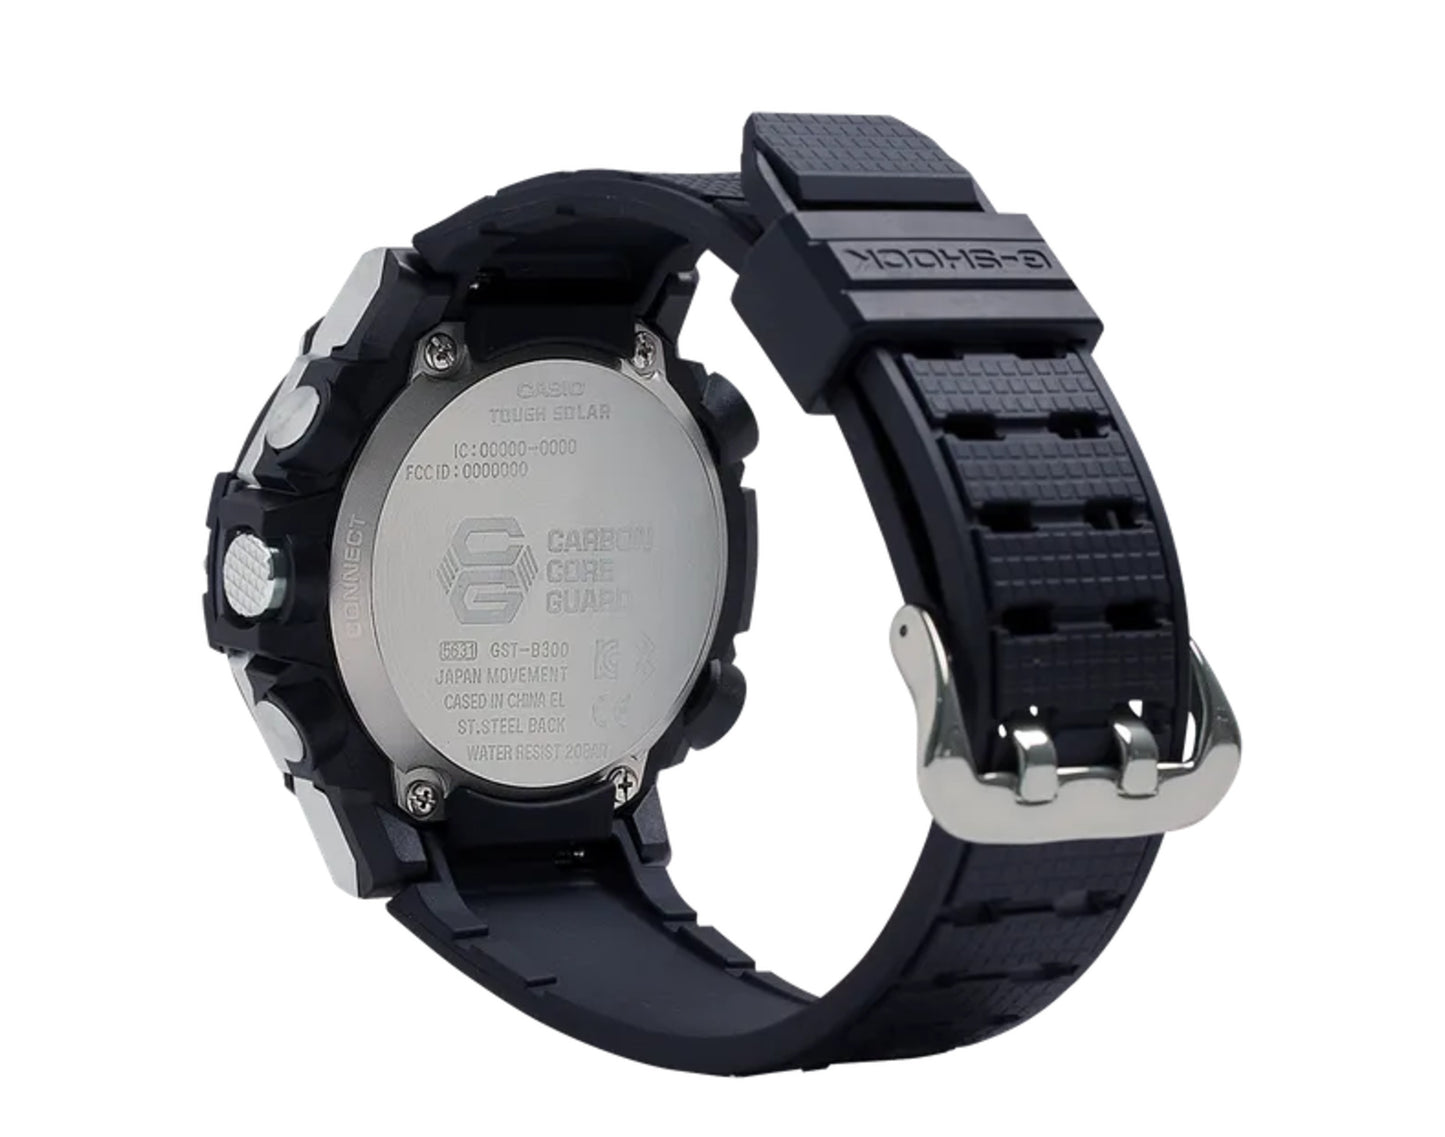 Casio G-Shock GSTB300 G-STEEL Analog-Digital Chrono Men's Watch